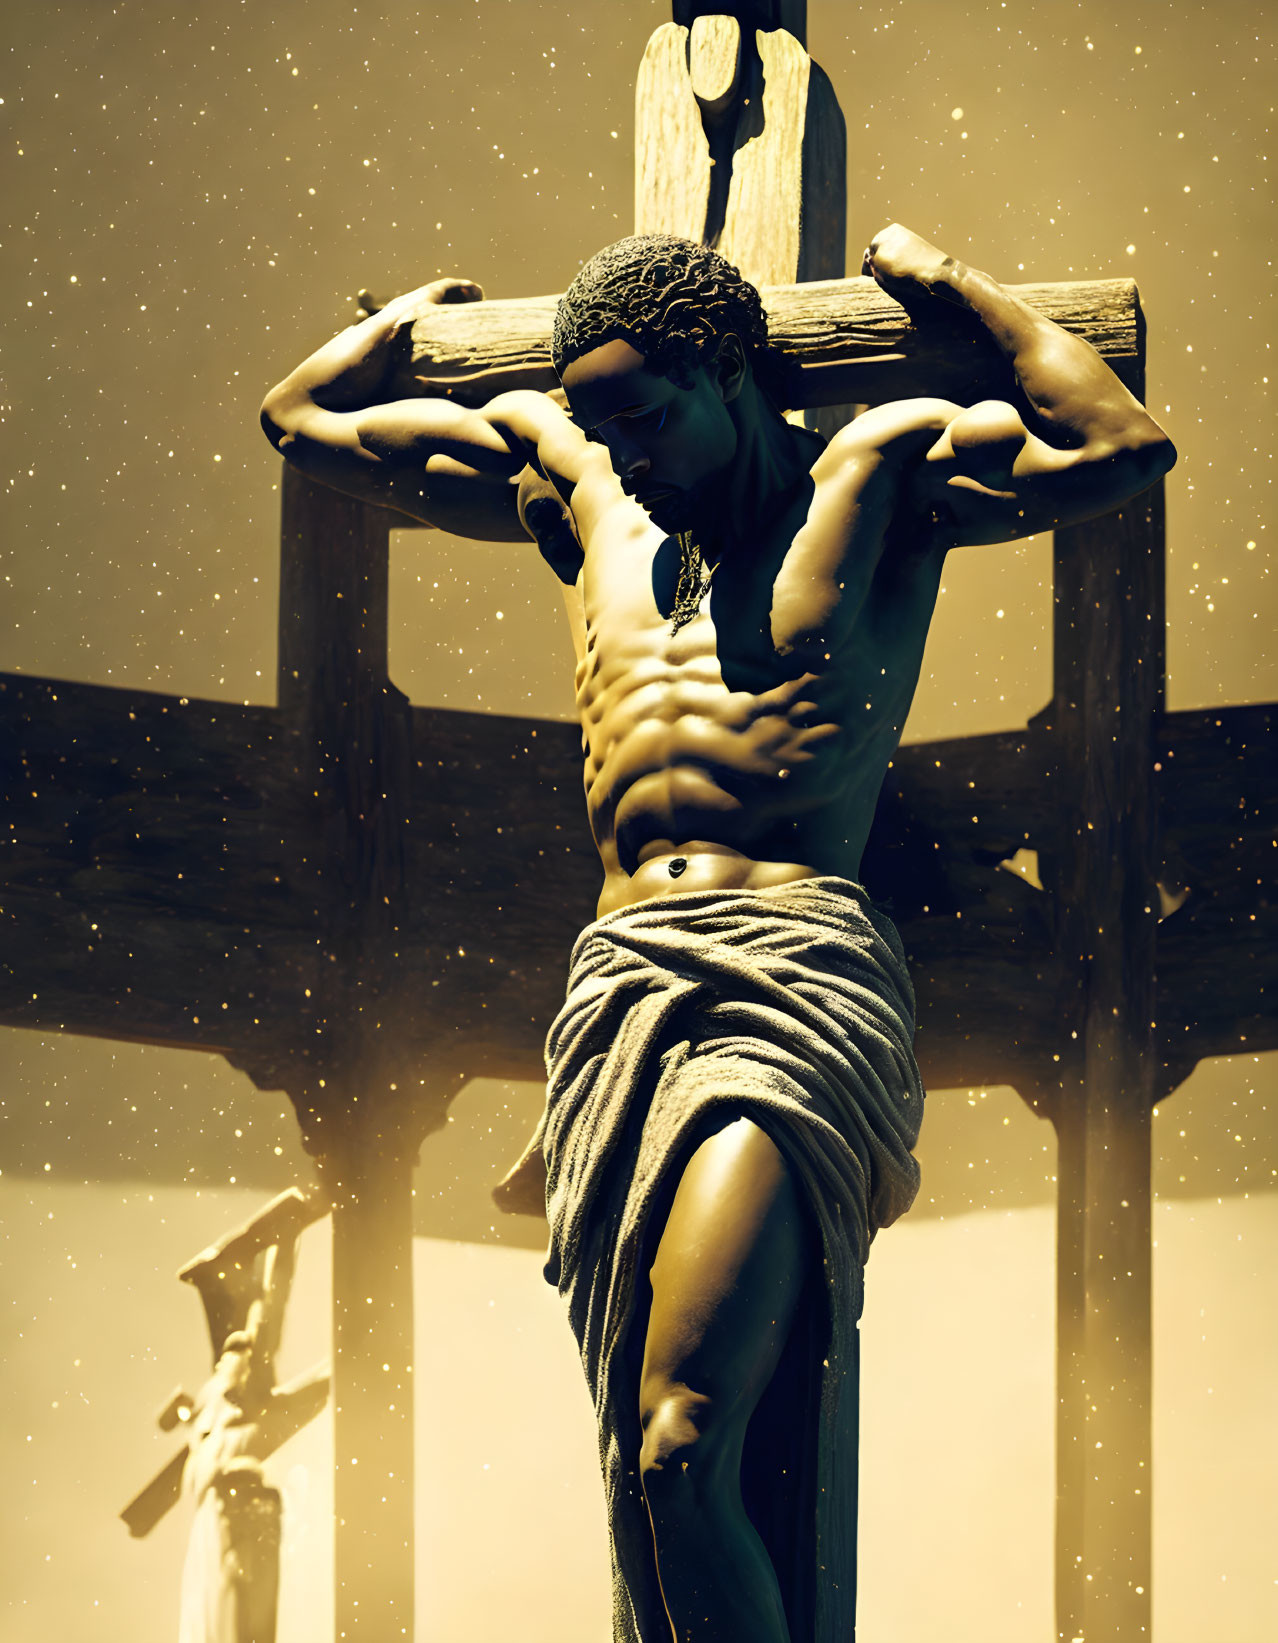 Muscular Jesus on Cross Sculpture with Golden Hue